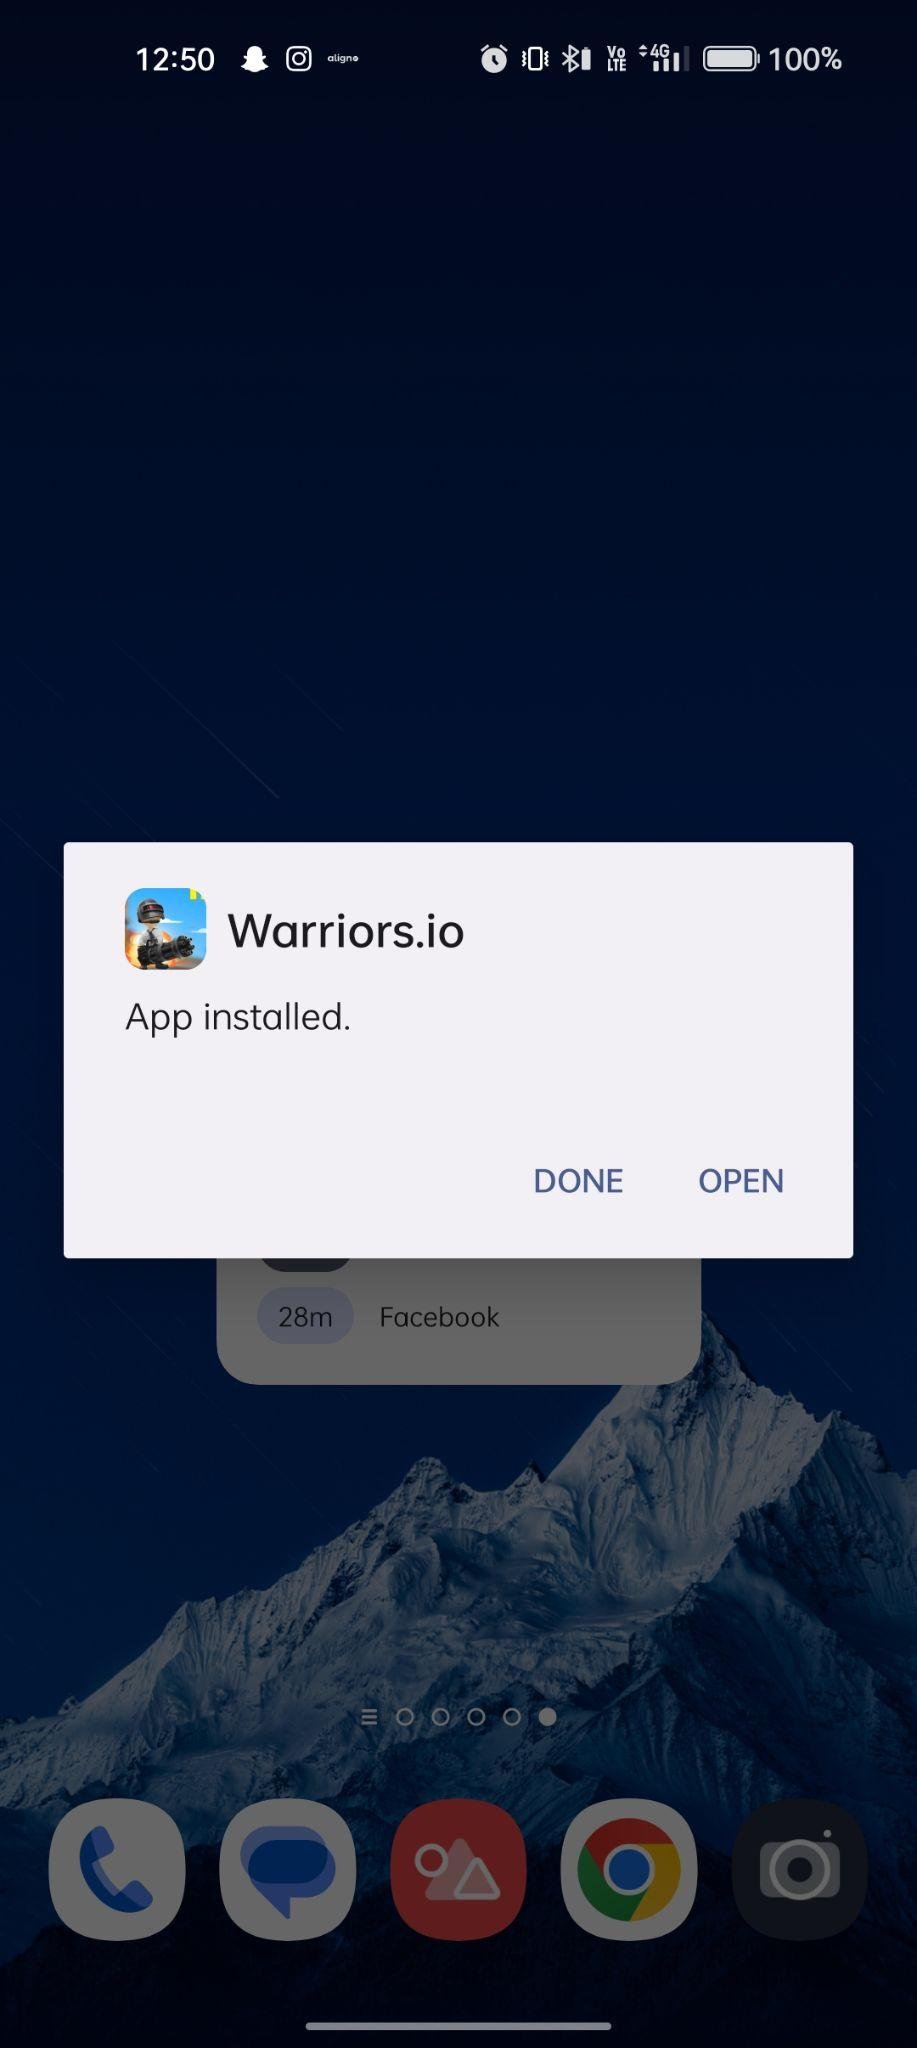 Warriors.io apk installed